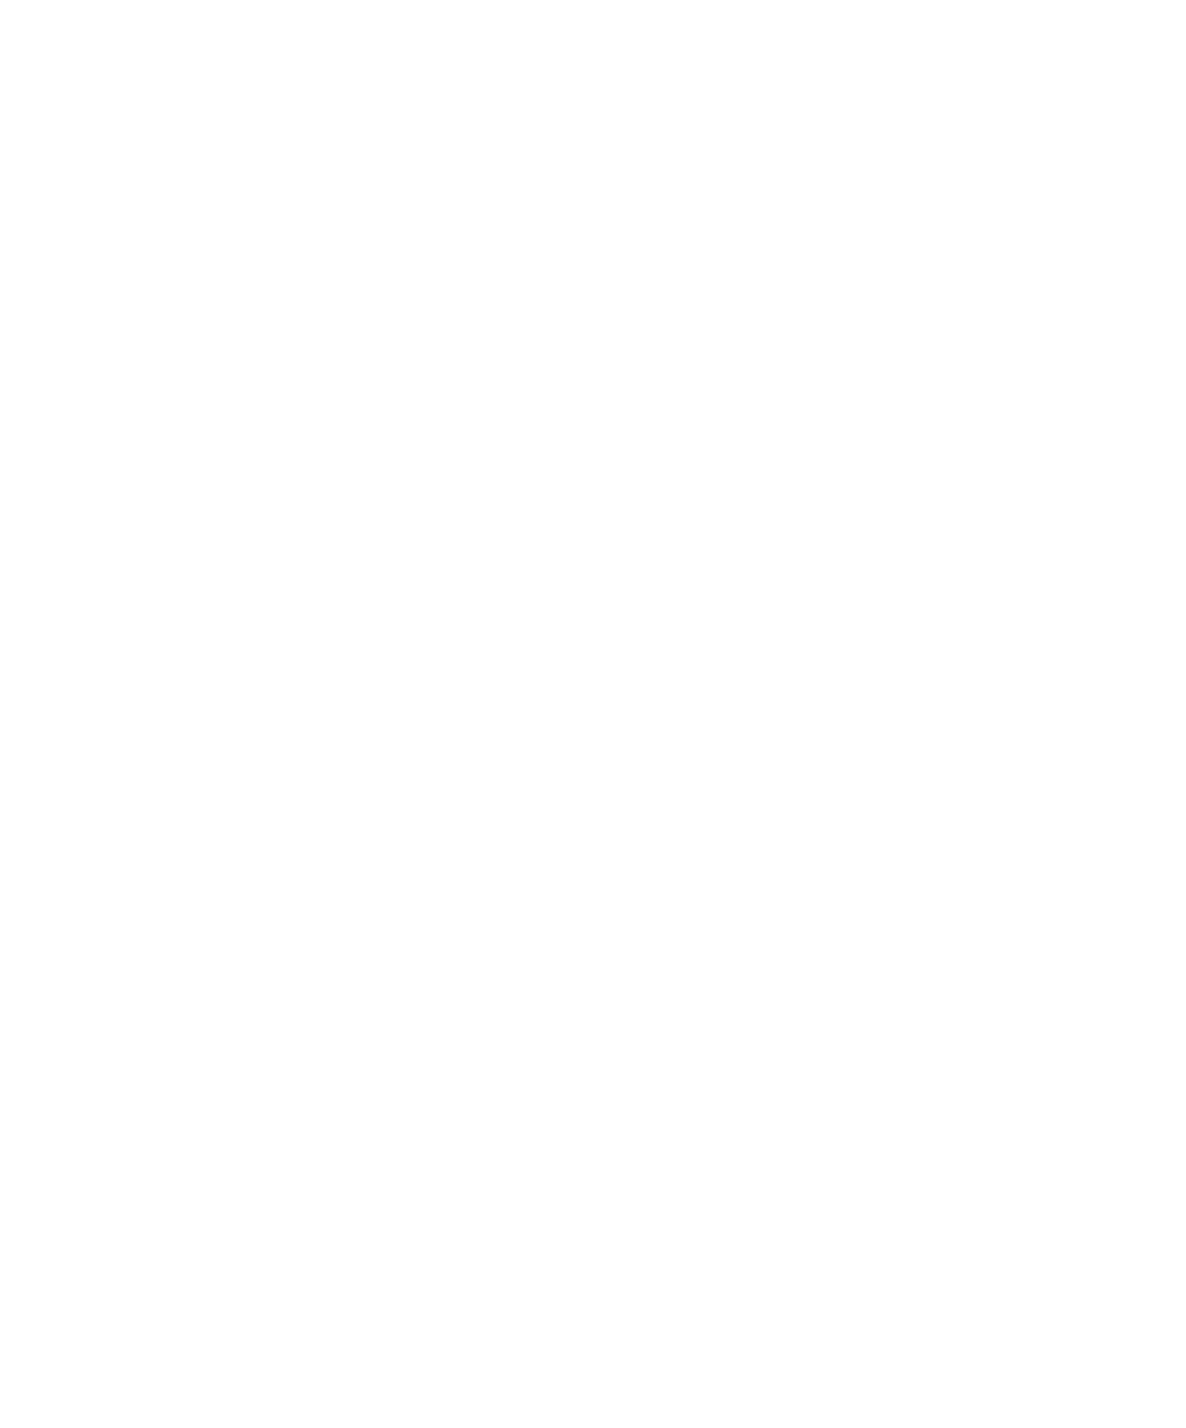 Transitional Designs